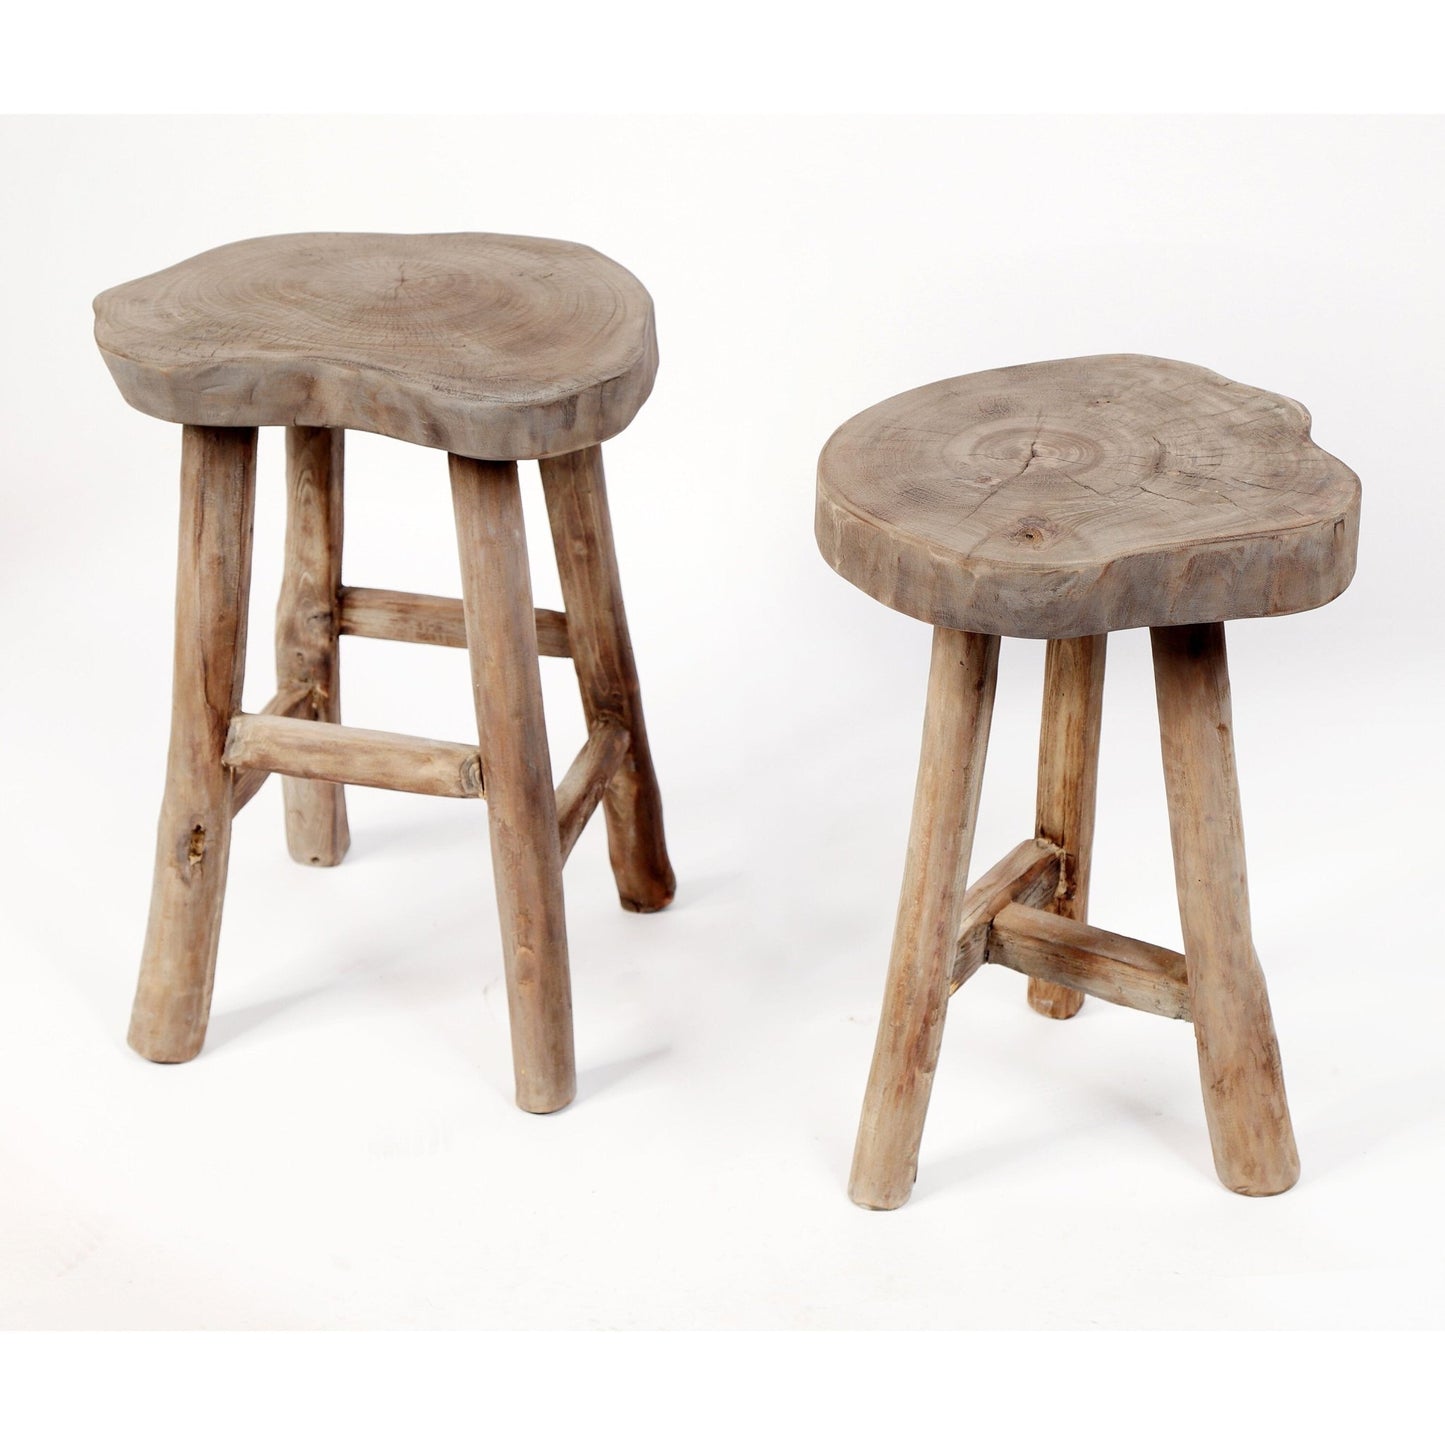 Rustic Wooden Chair for Farmhouse | Decor Handmade, Creative Chair - -